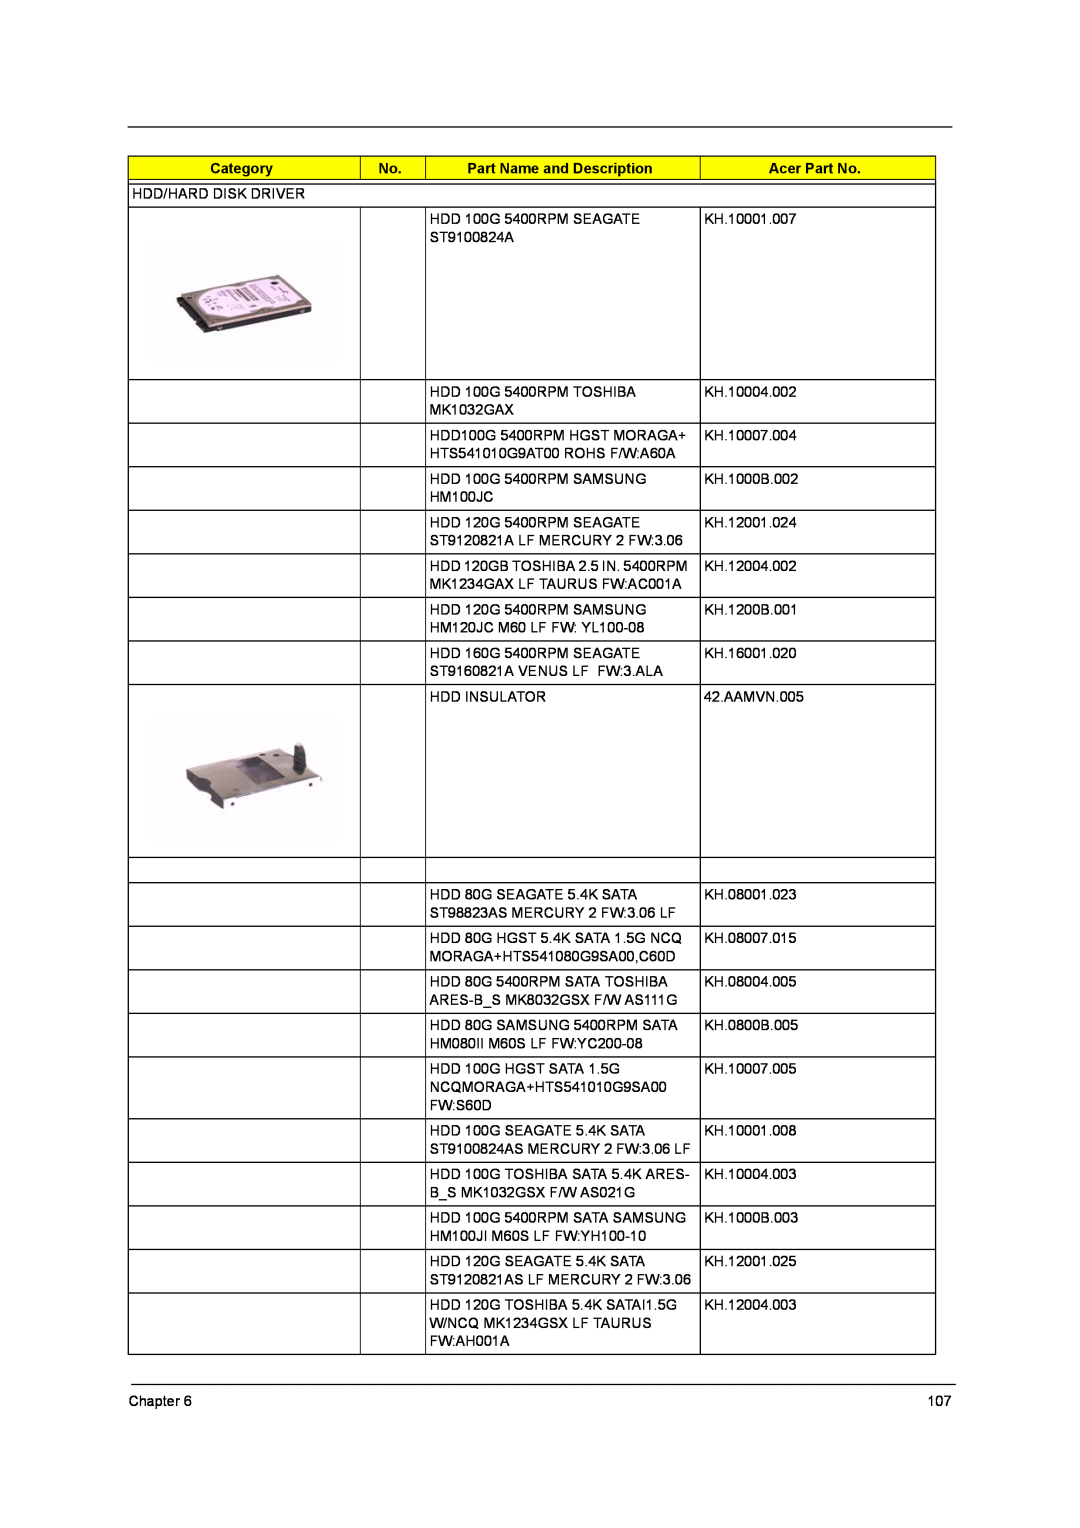 Acer 9800 manual Category, Part Name and Description, Acer Part No 